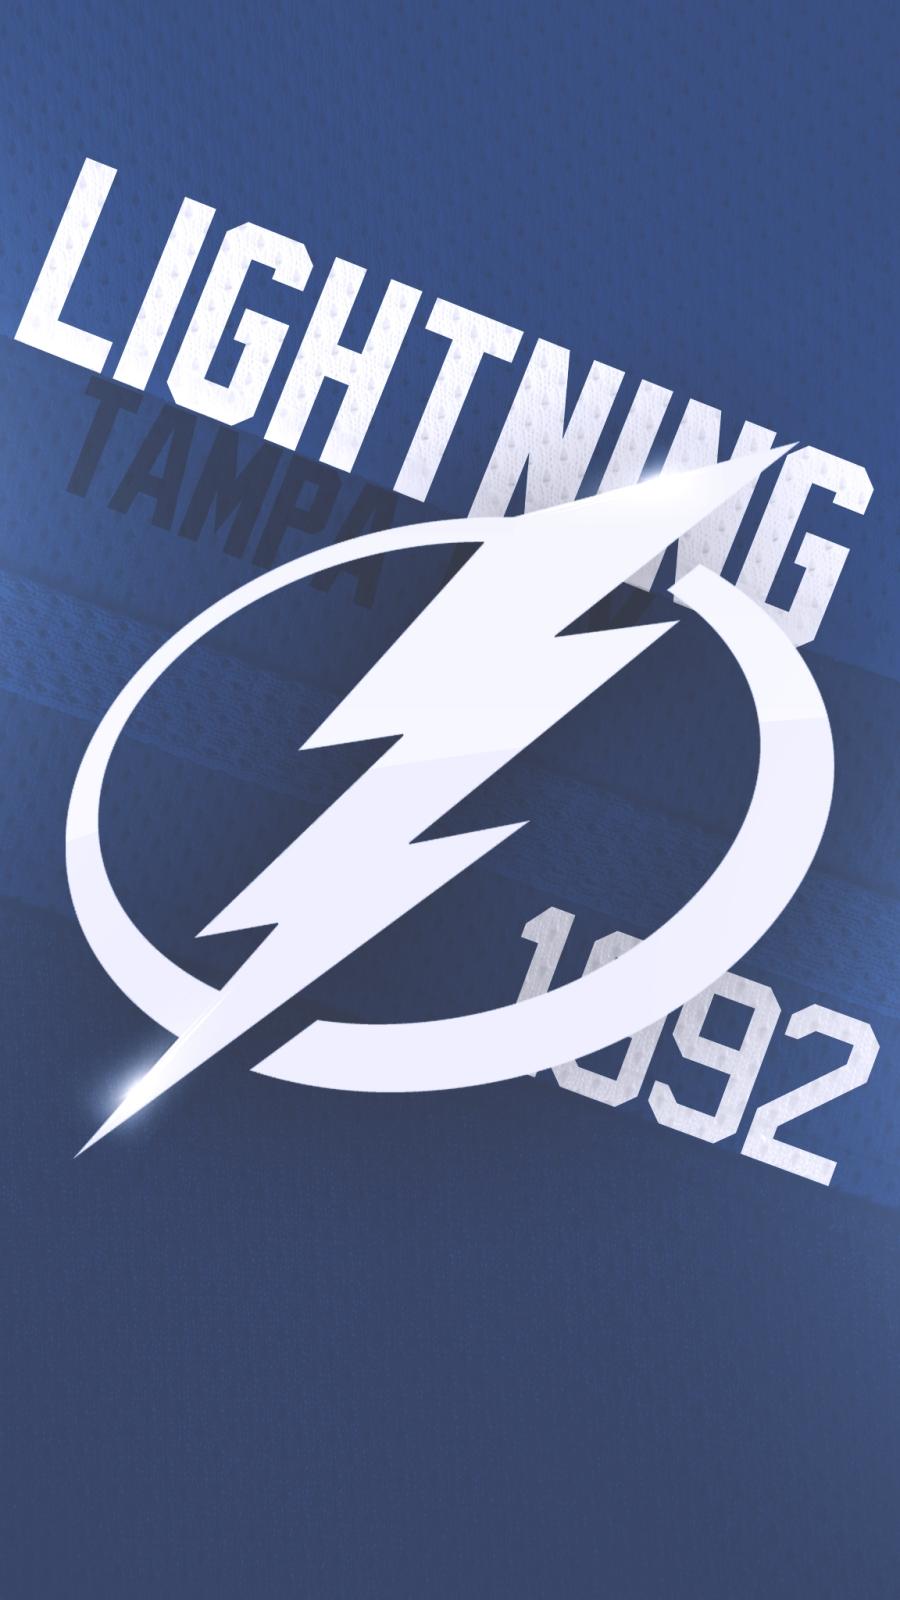 Best Tampa Bay Lightning iPhone Wallpaper FULL HD 1920×1080